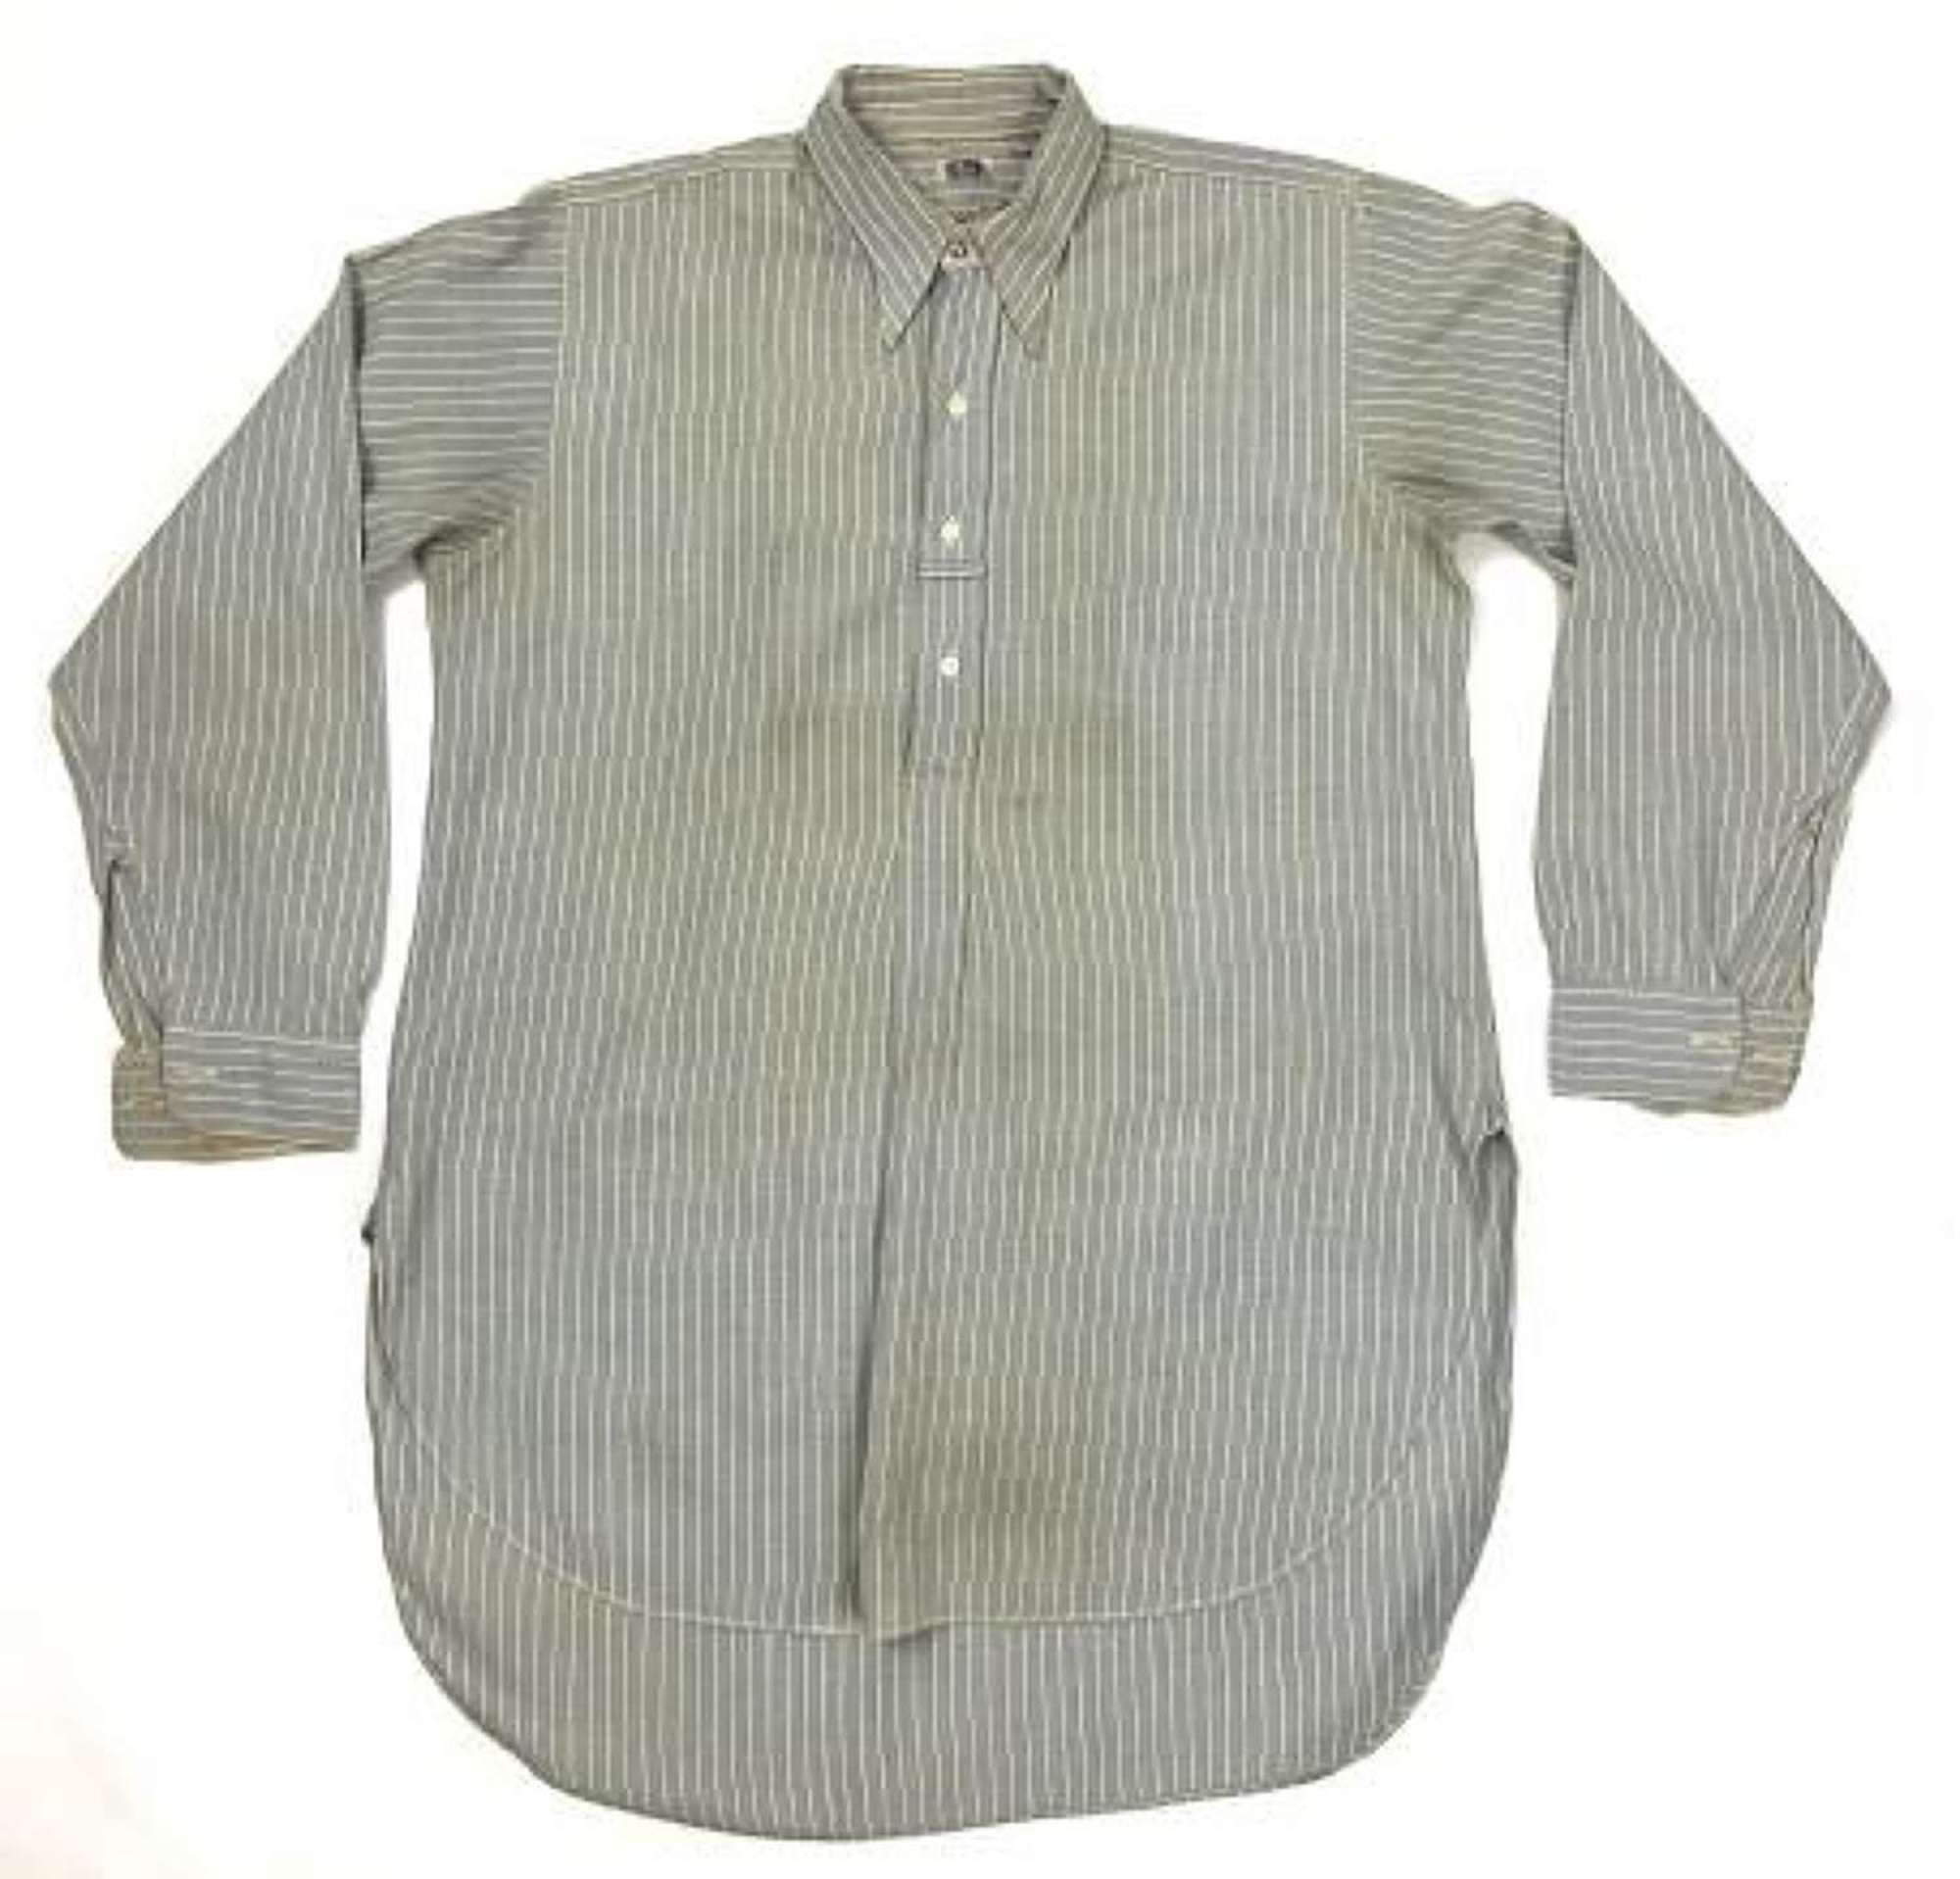 Original 1940s British Made Men's Collared Shirt by 'McLaren'